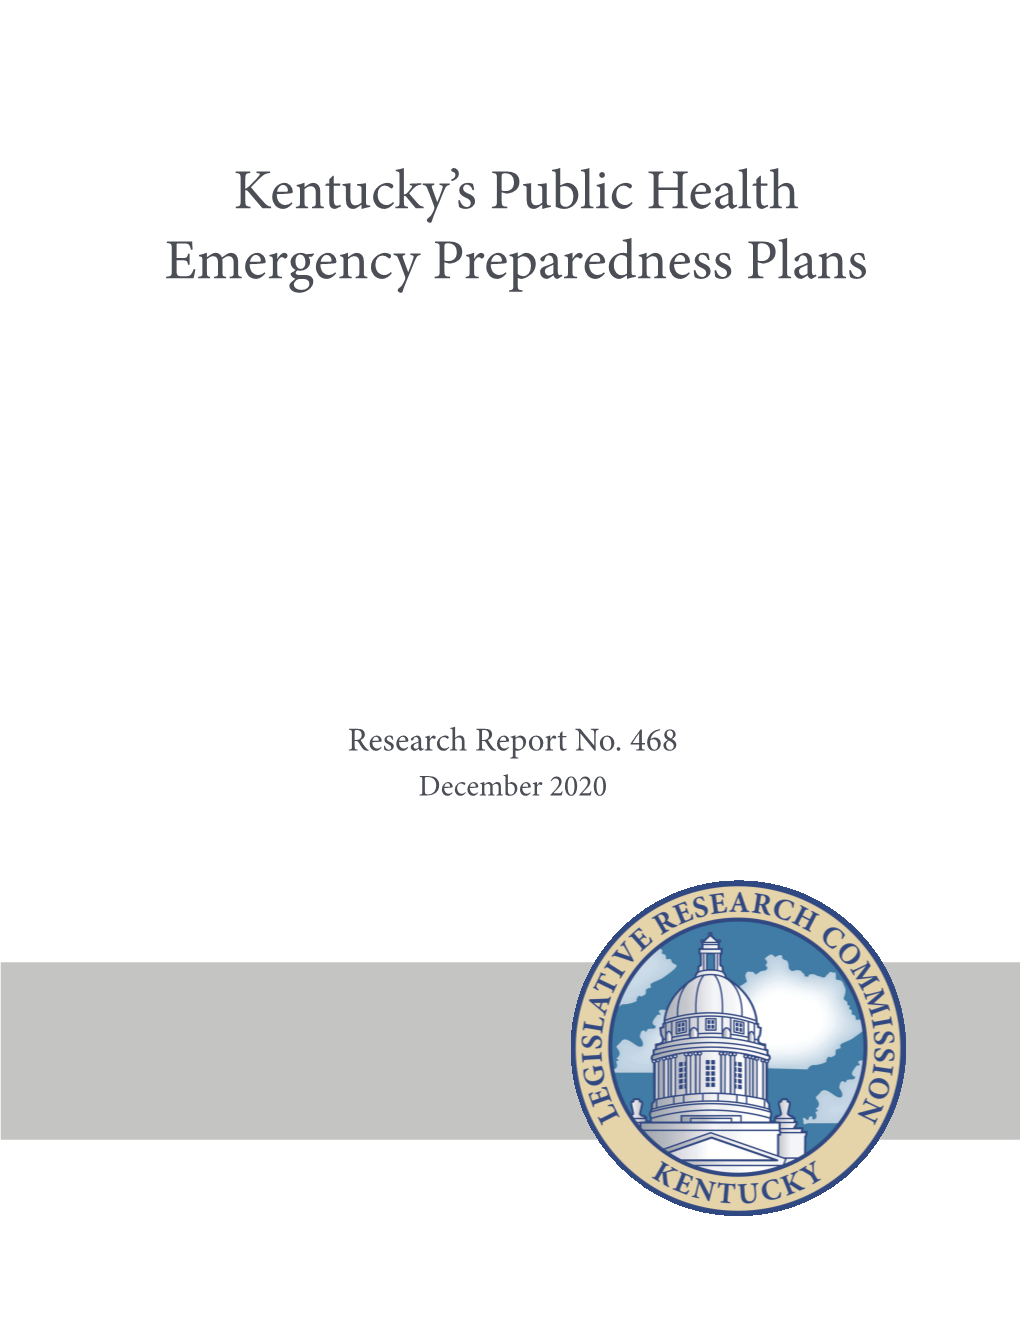 Kentucky's Public Health Emergency Preparedness Plans